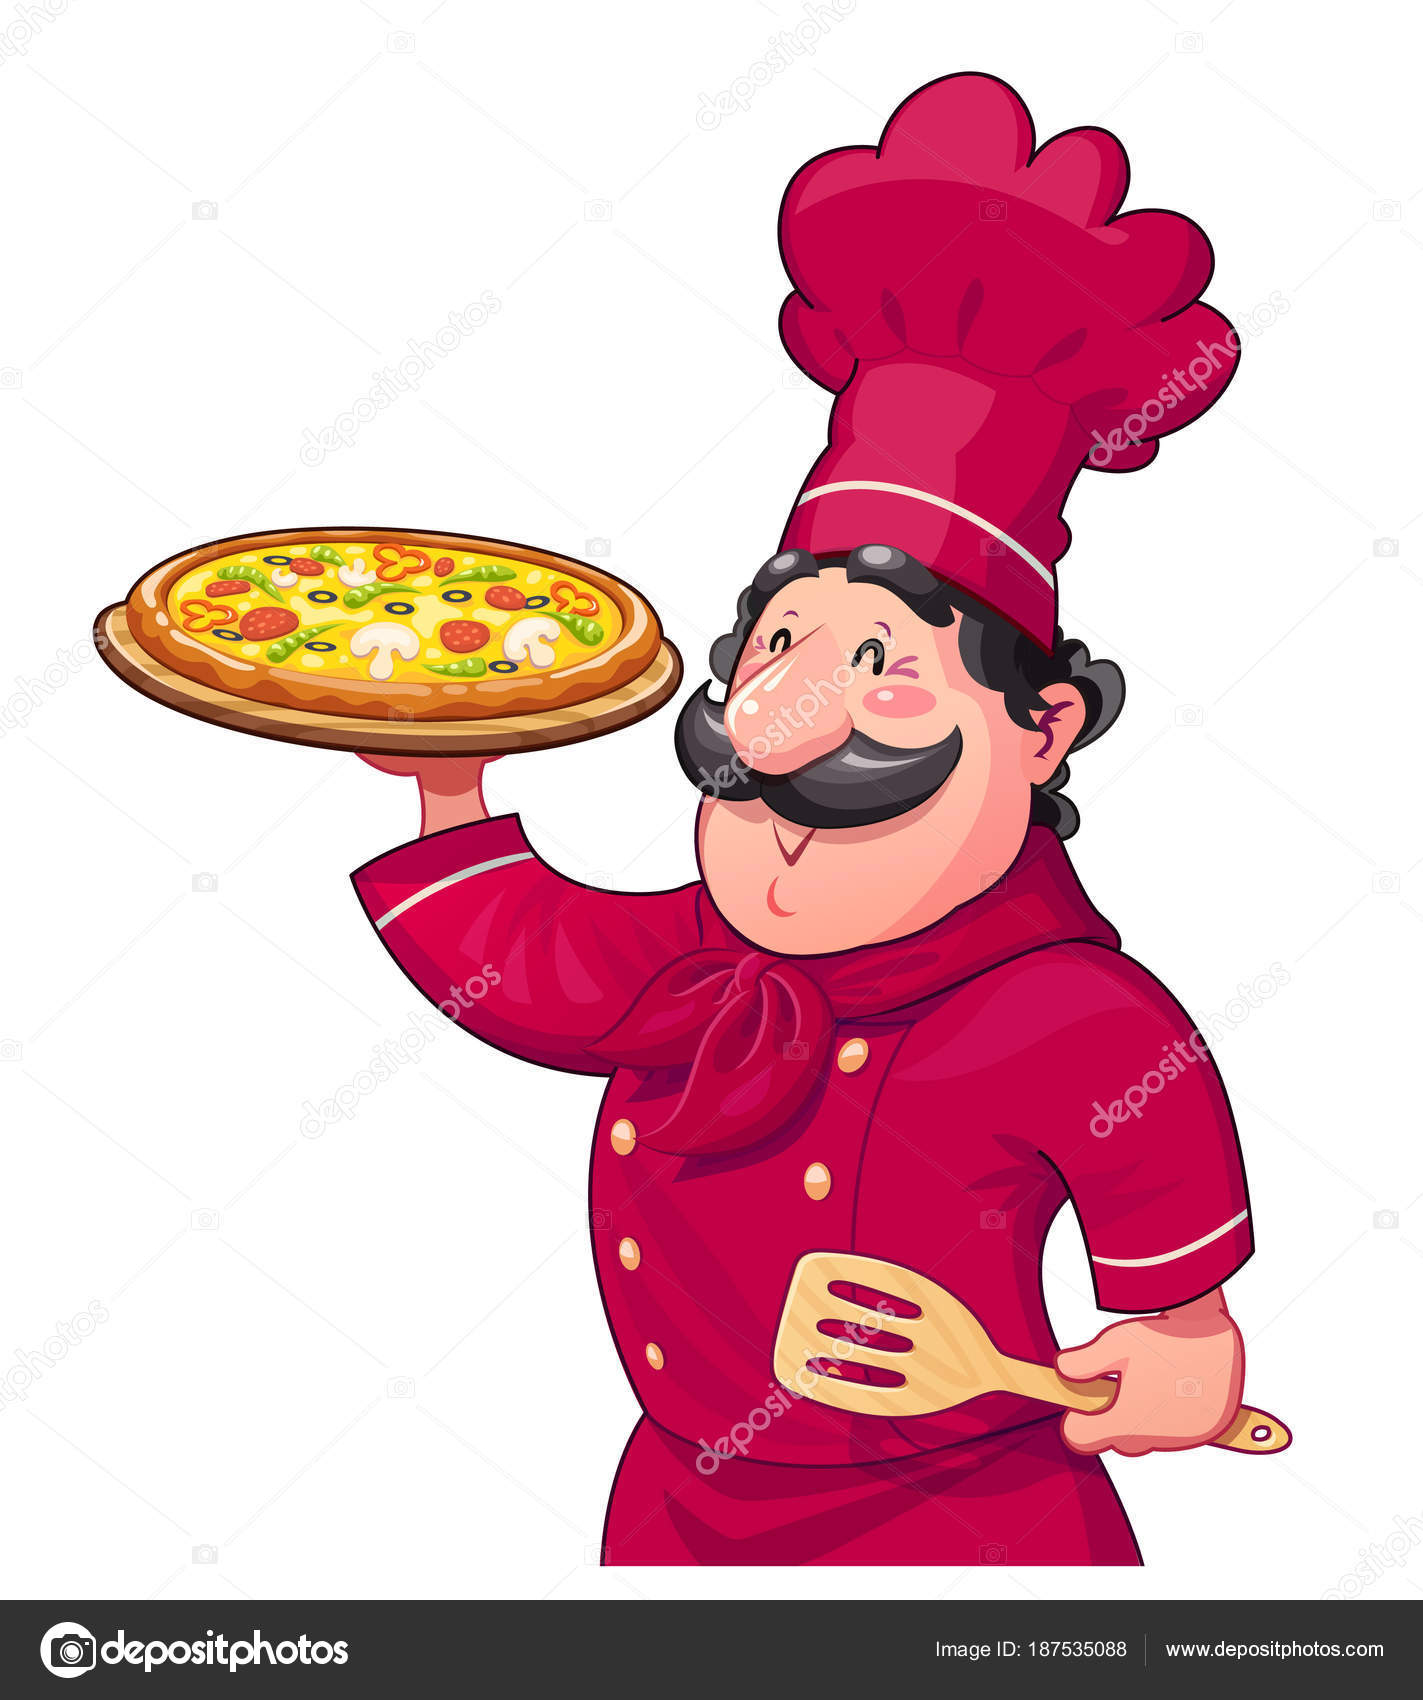 Pizza cartoon Vector Art Stock Images | Depositphotos